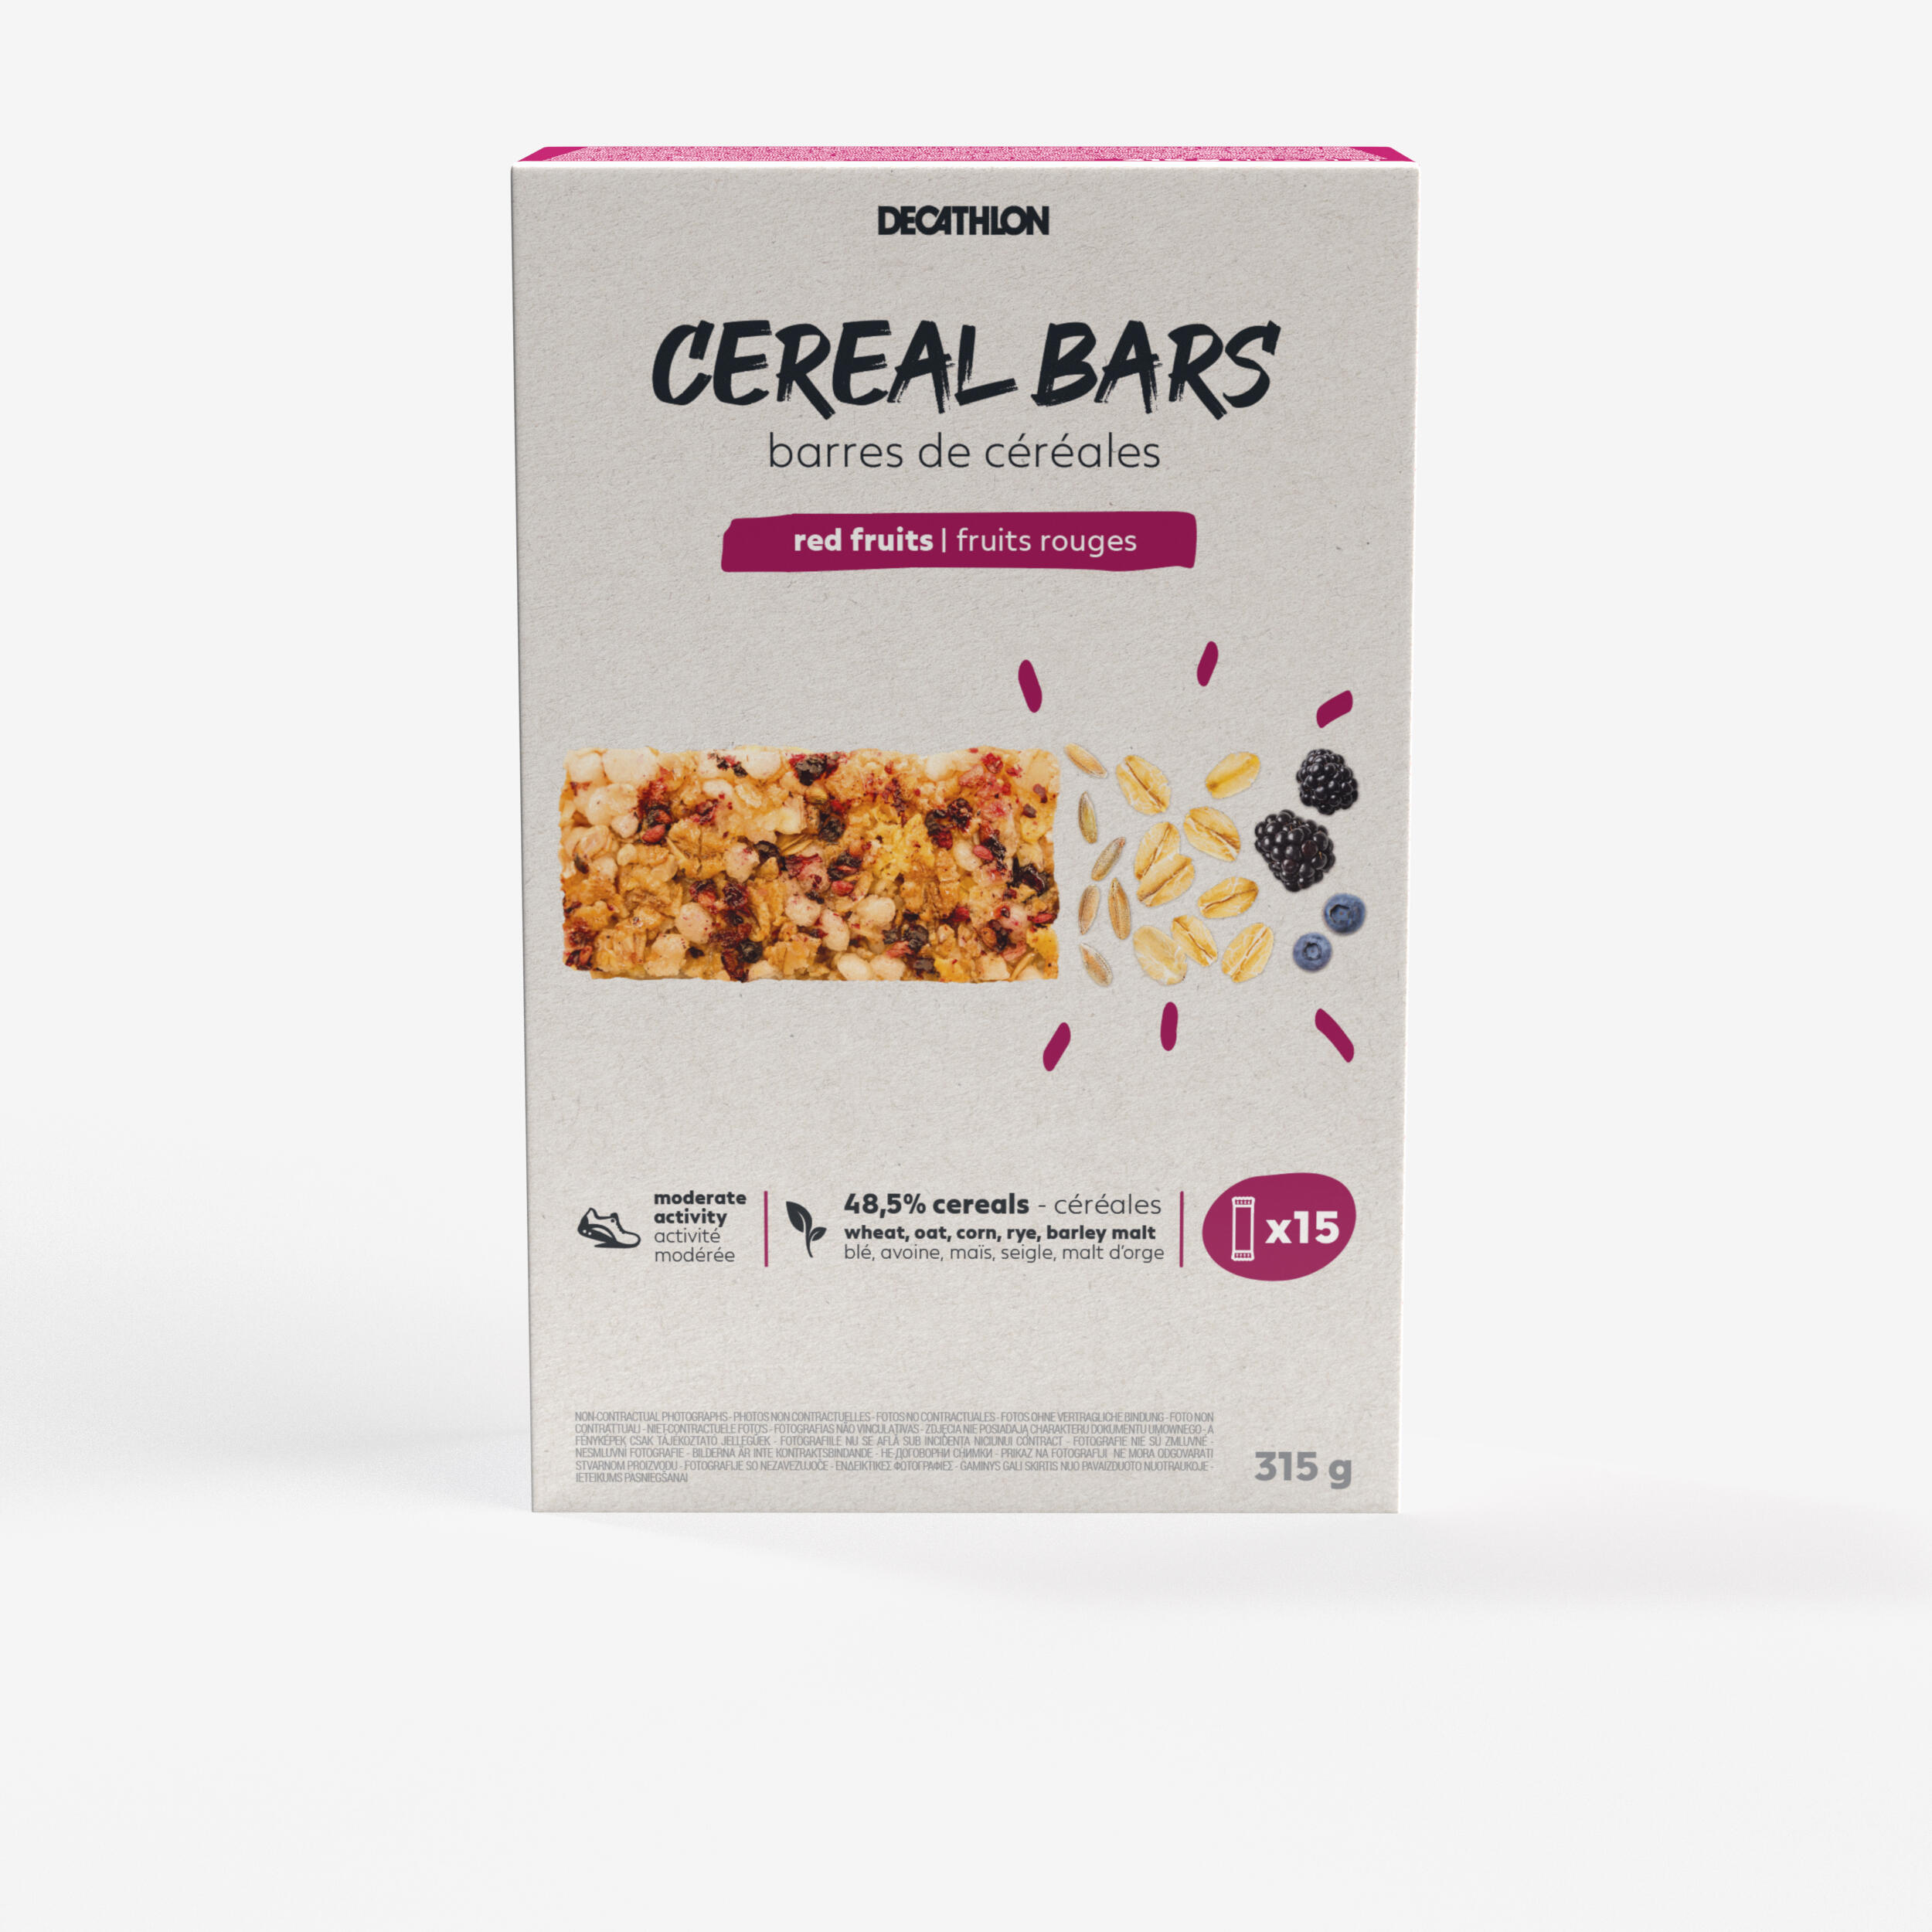 DECATHLON Cereal bars mixed berries X15 